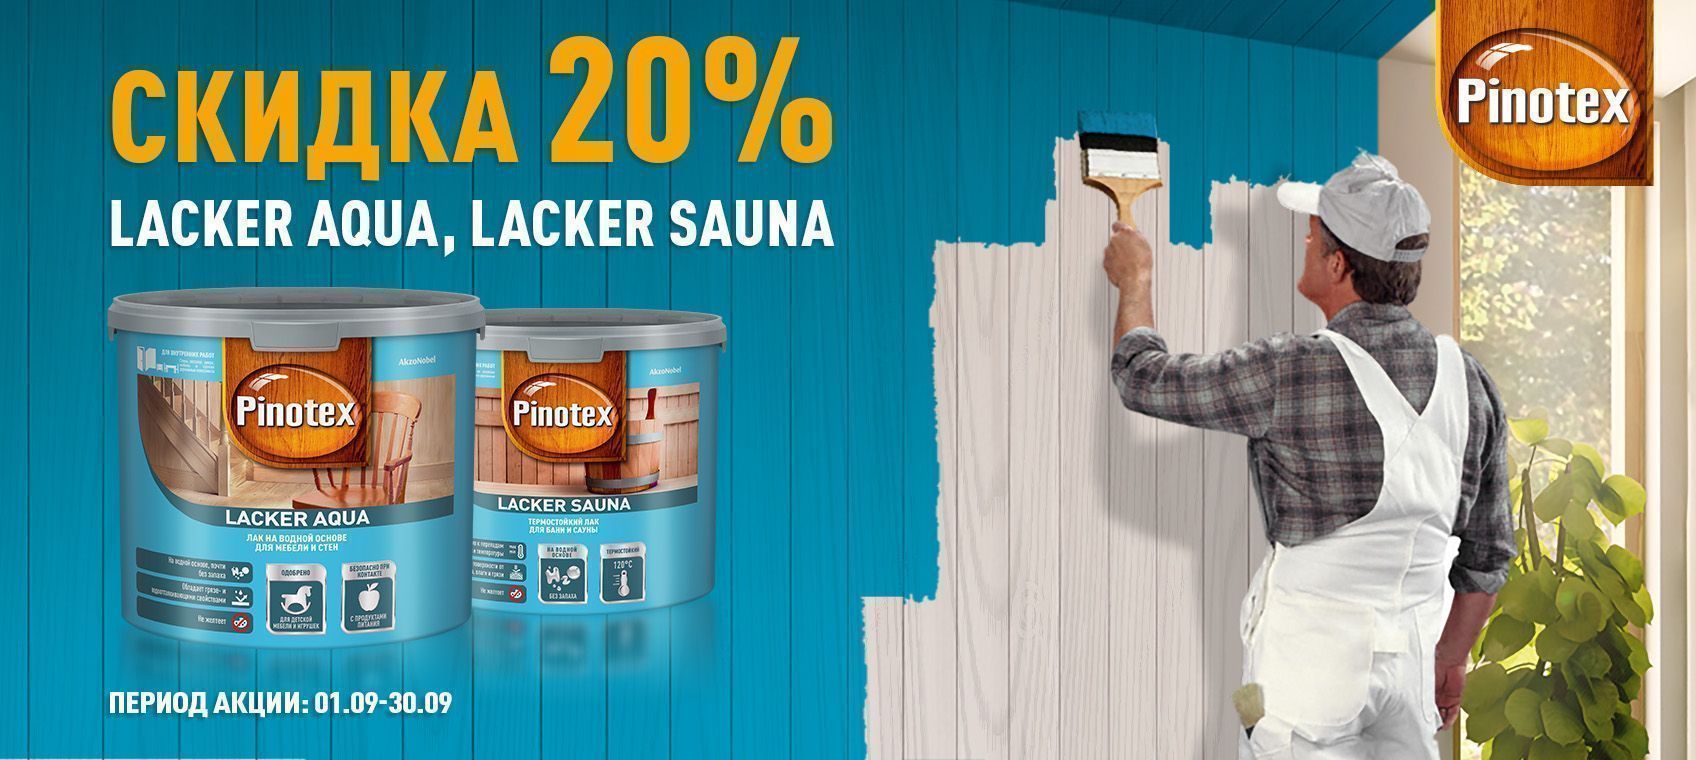 Скидка 20% на Pinotex Lacker Aqua и Lacker Sauna